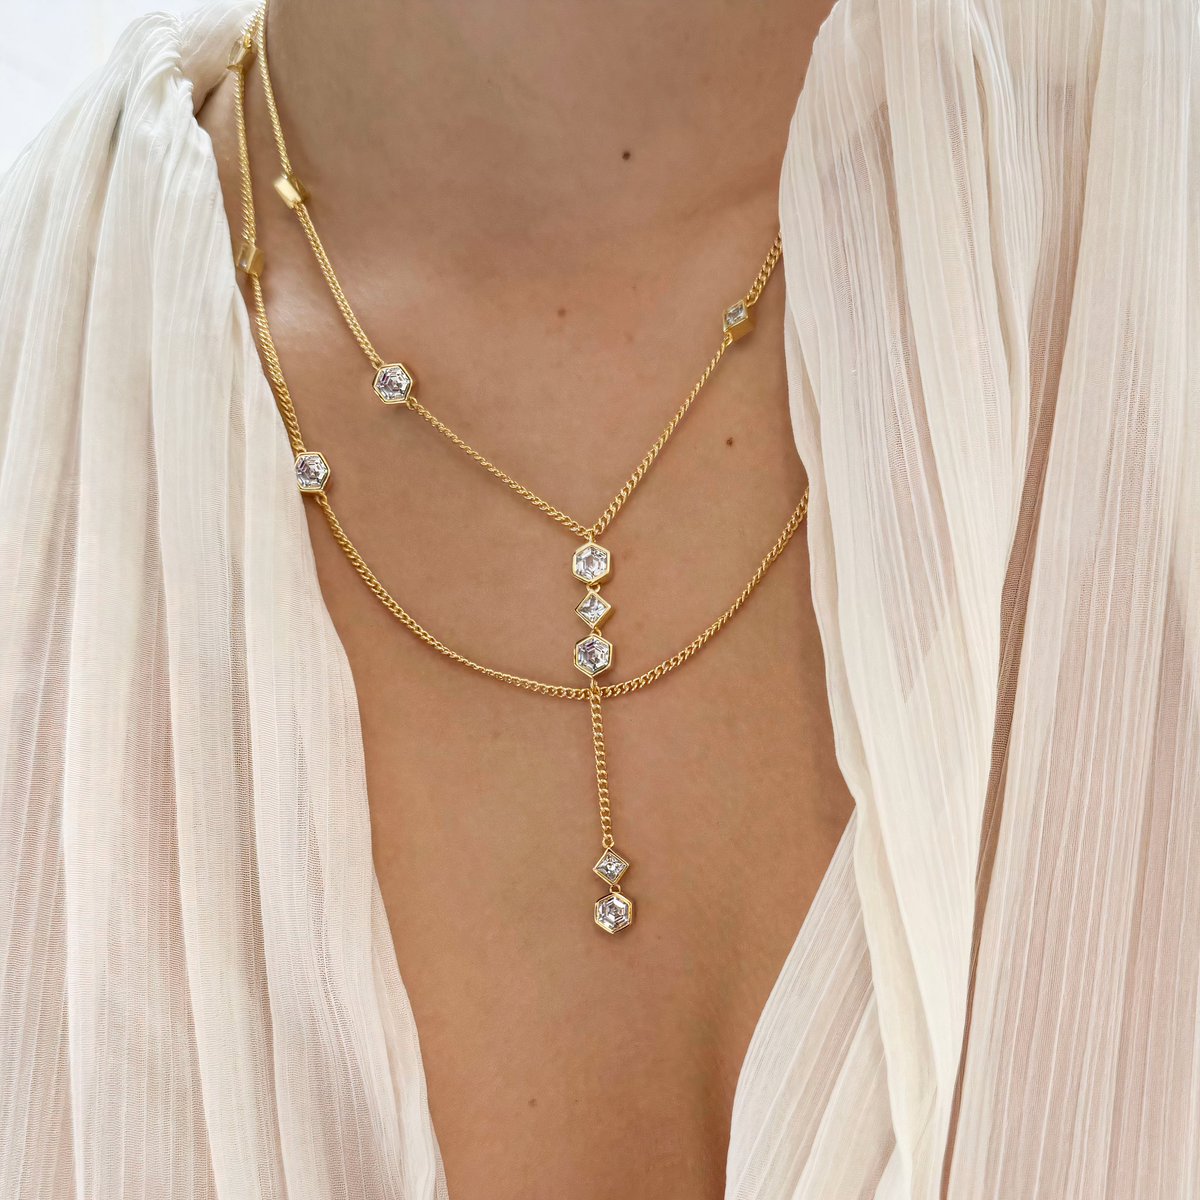 Layering our way through day ✨ The Morgane Necklace 💎 #ShopBonheur #BonheurJewelry . #LayeredNecklace #JewelryGifts #GiftsForHer #JewelryMadeToLastALifetime